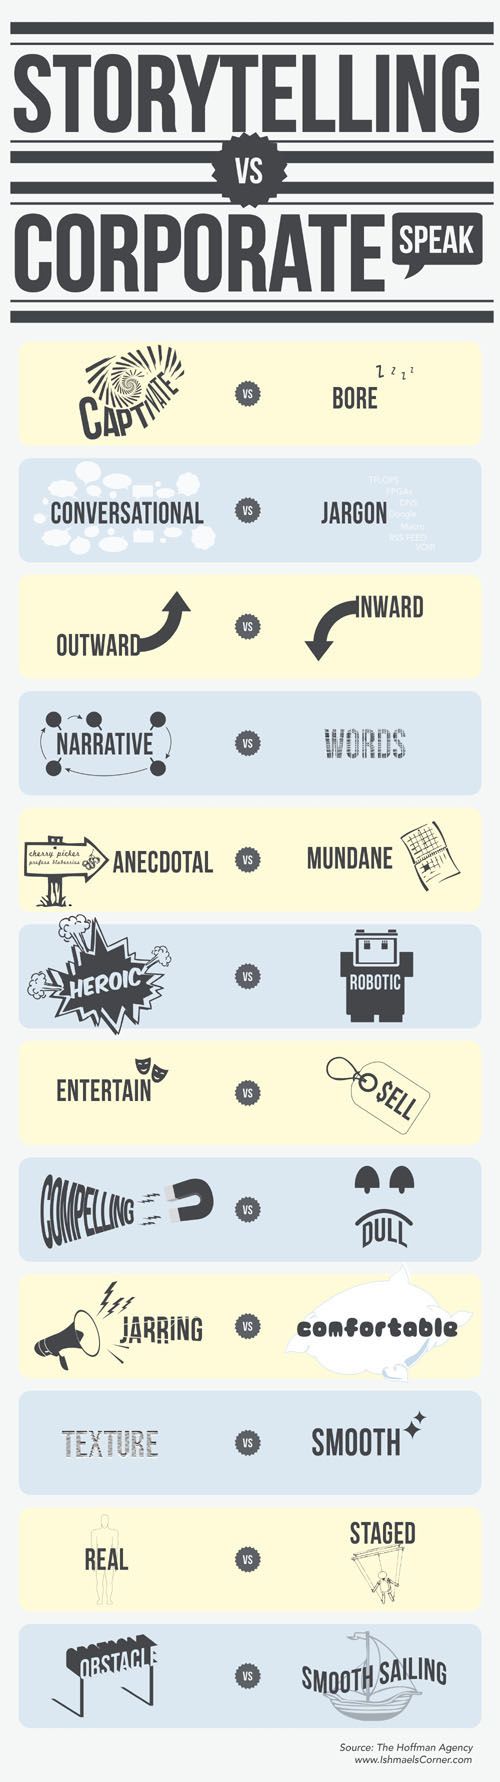 Infographic On Storytelling Versus Corporate Speak